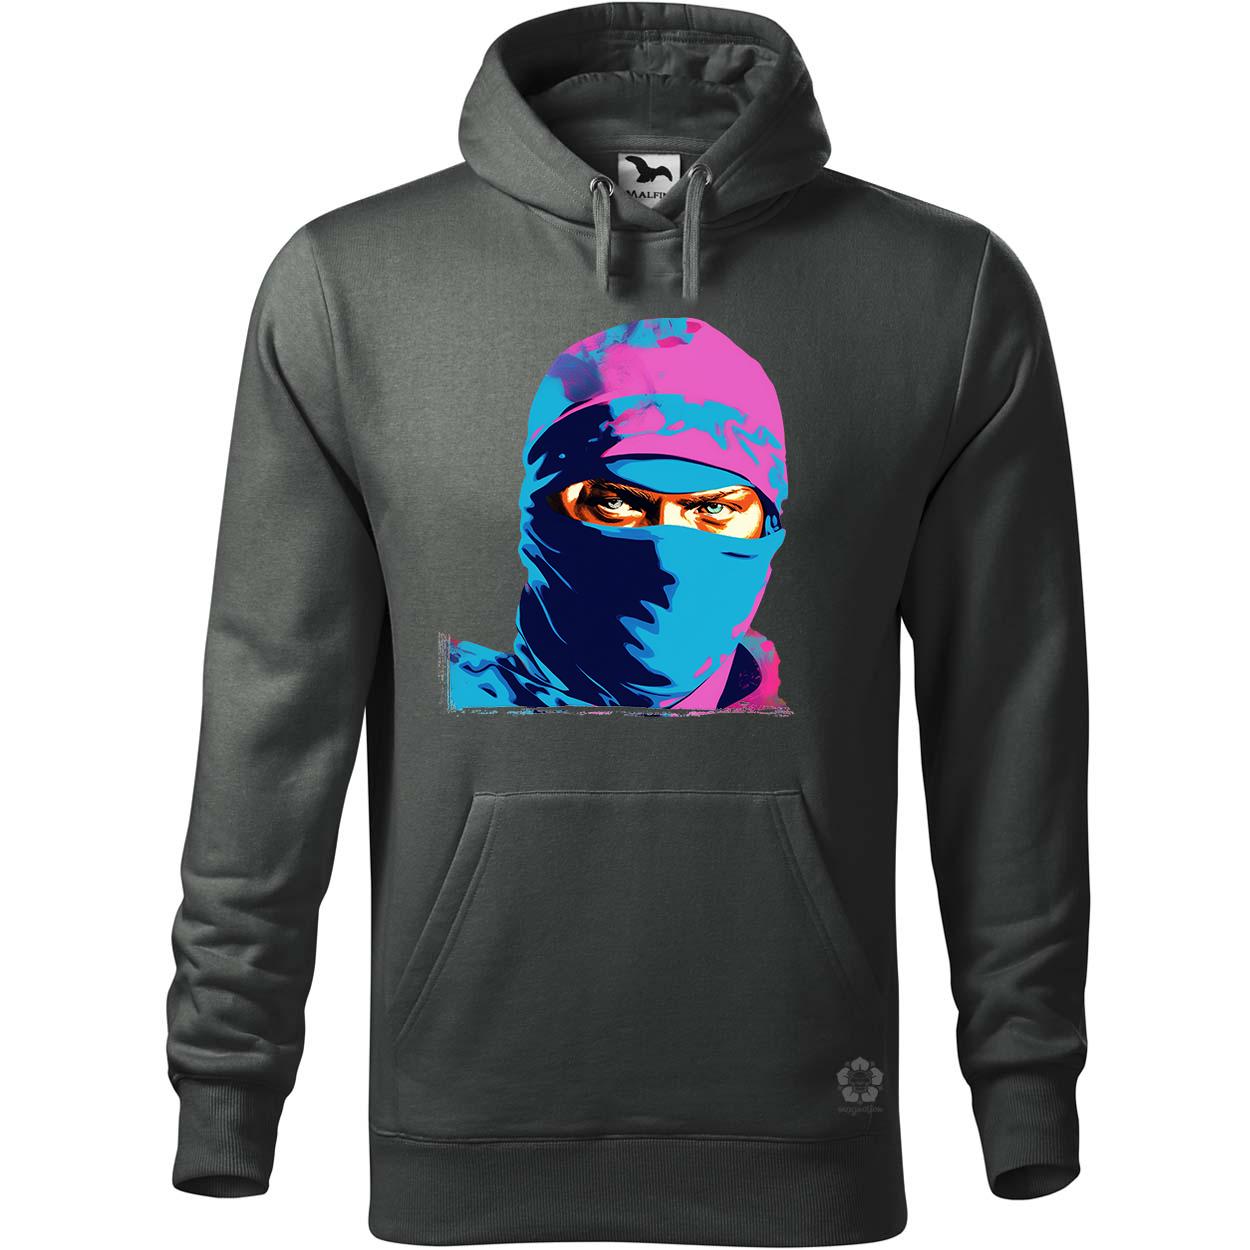 Warhol ninja